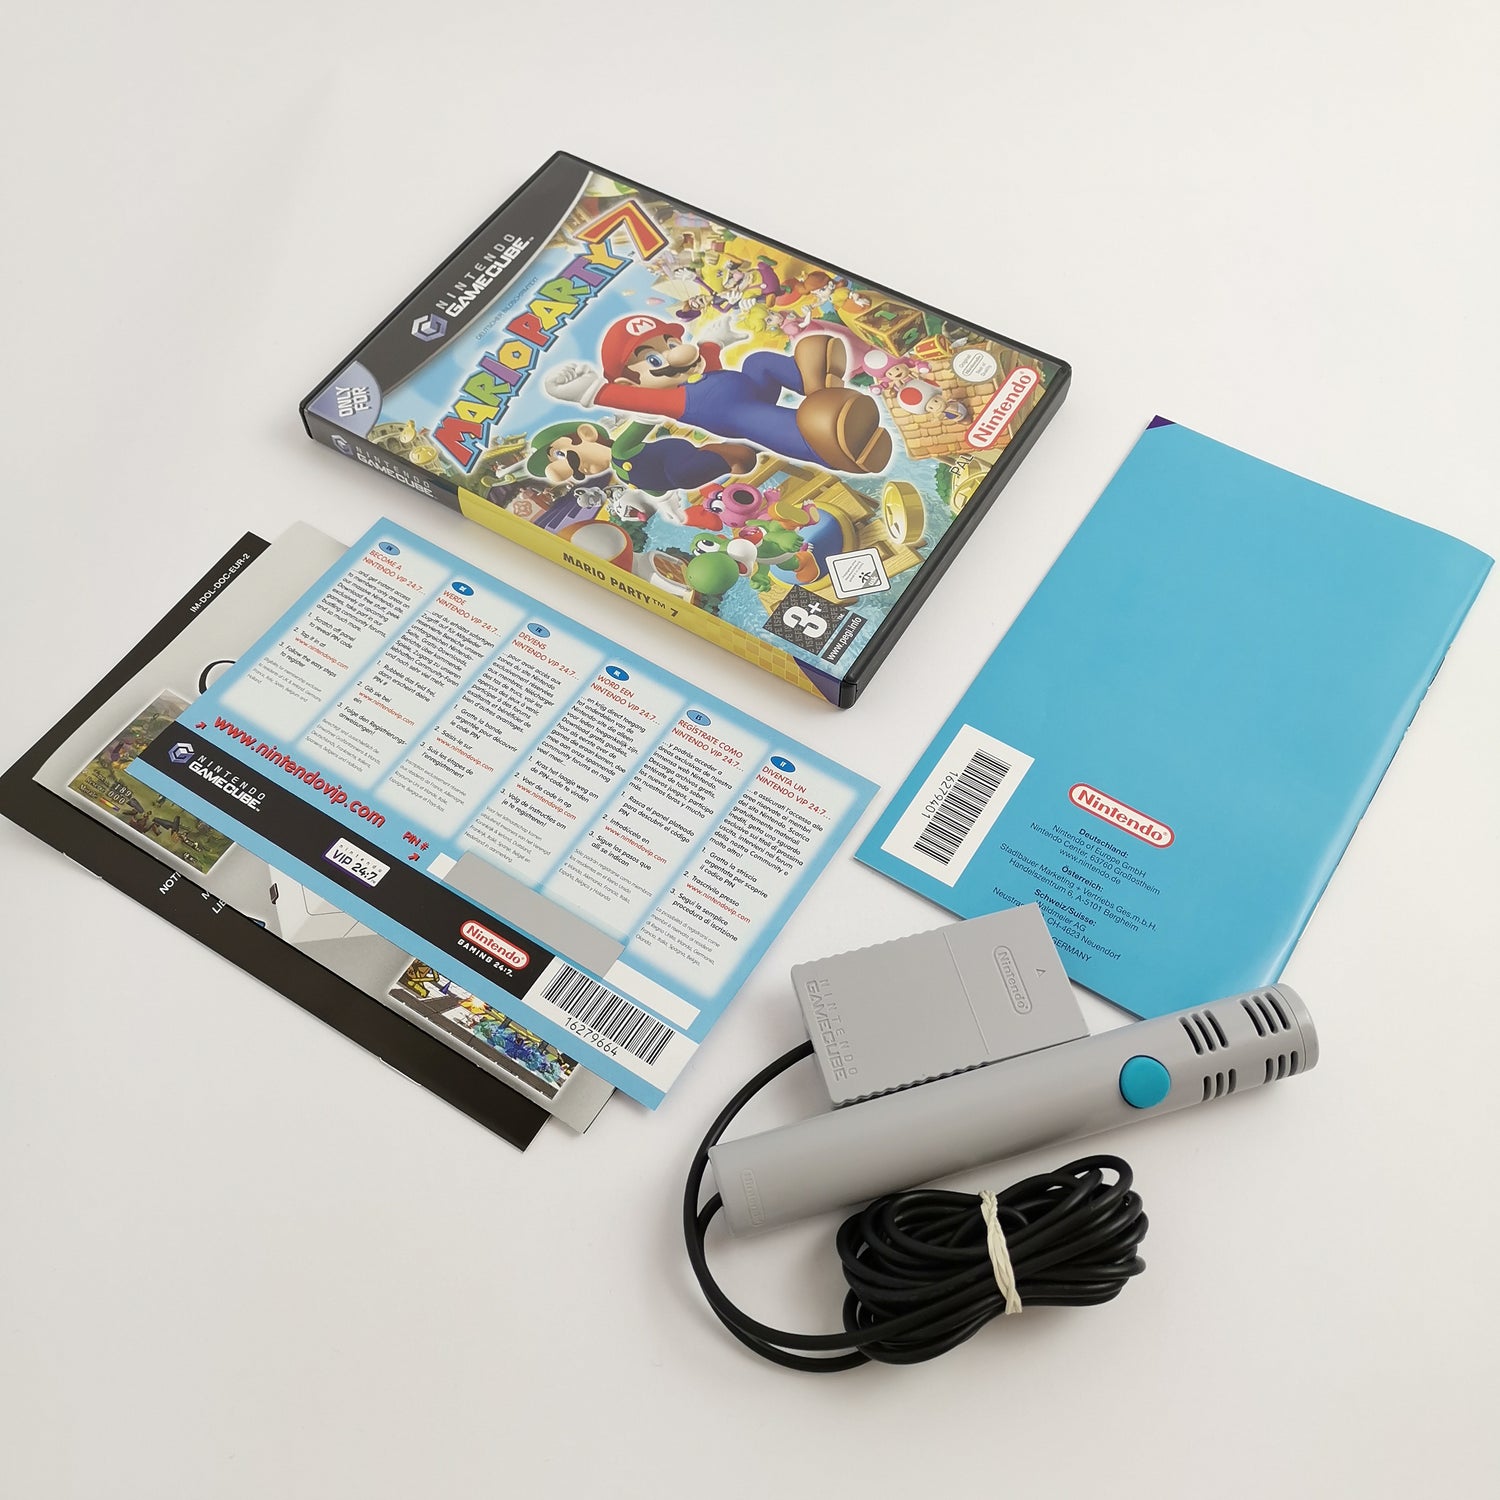 Nintendo Gamecube Spiel 